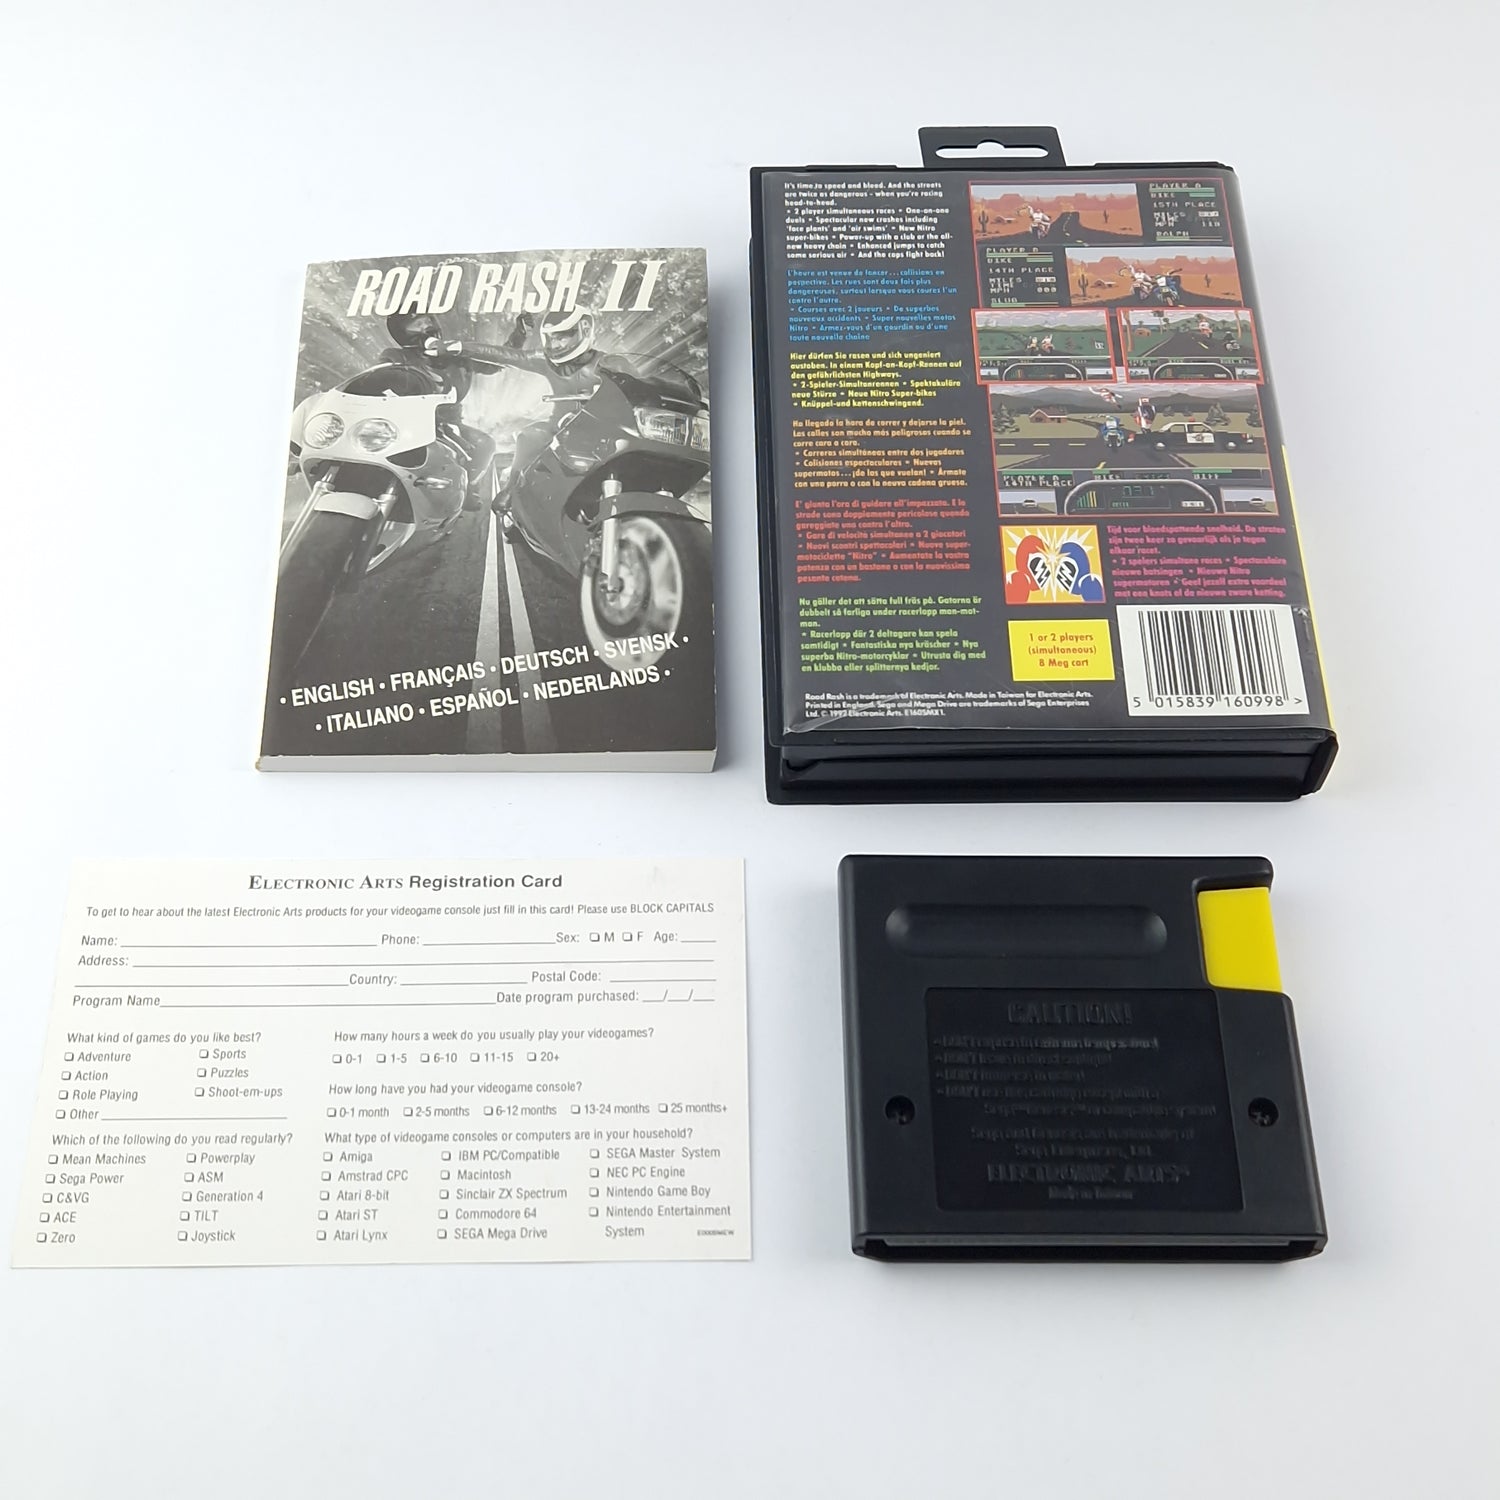 Sega Mega Drive Game: Road Rash II 2 - OVP Instructions Module | 16-Bit Pal Game